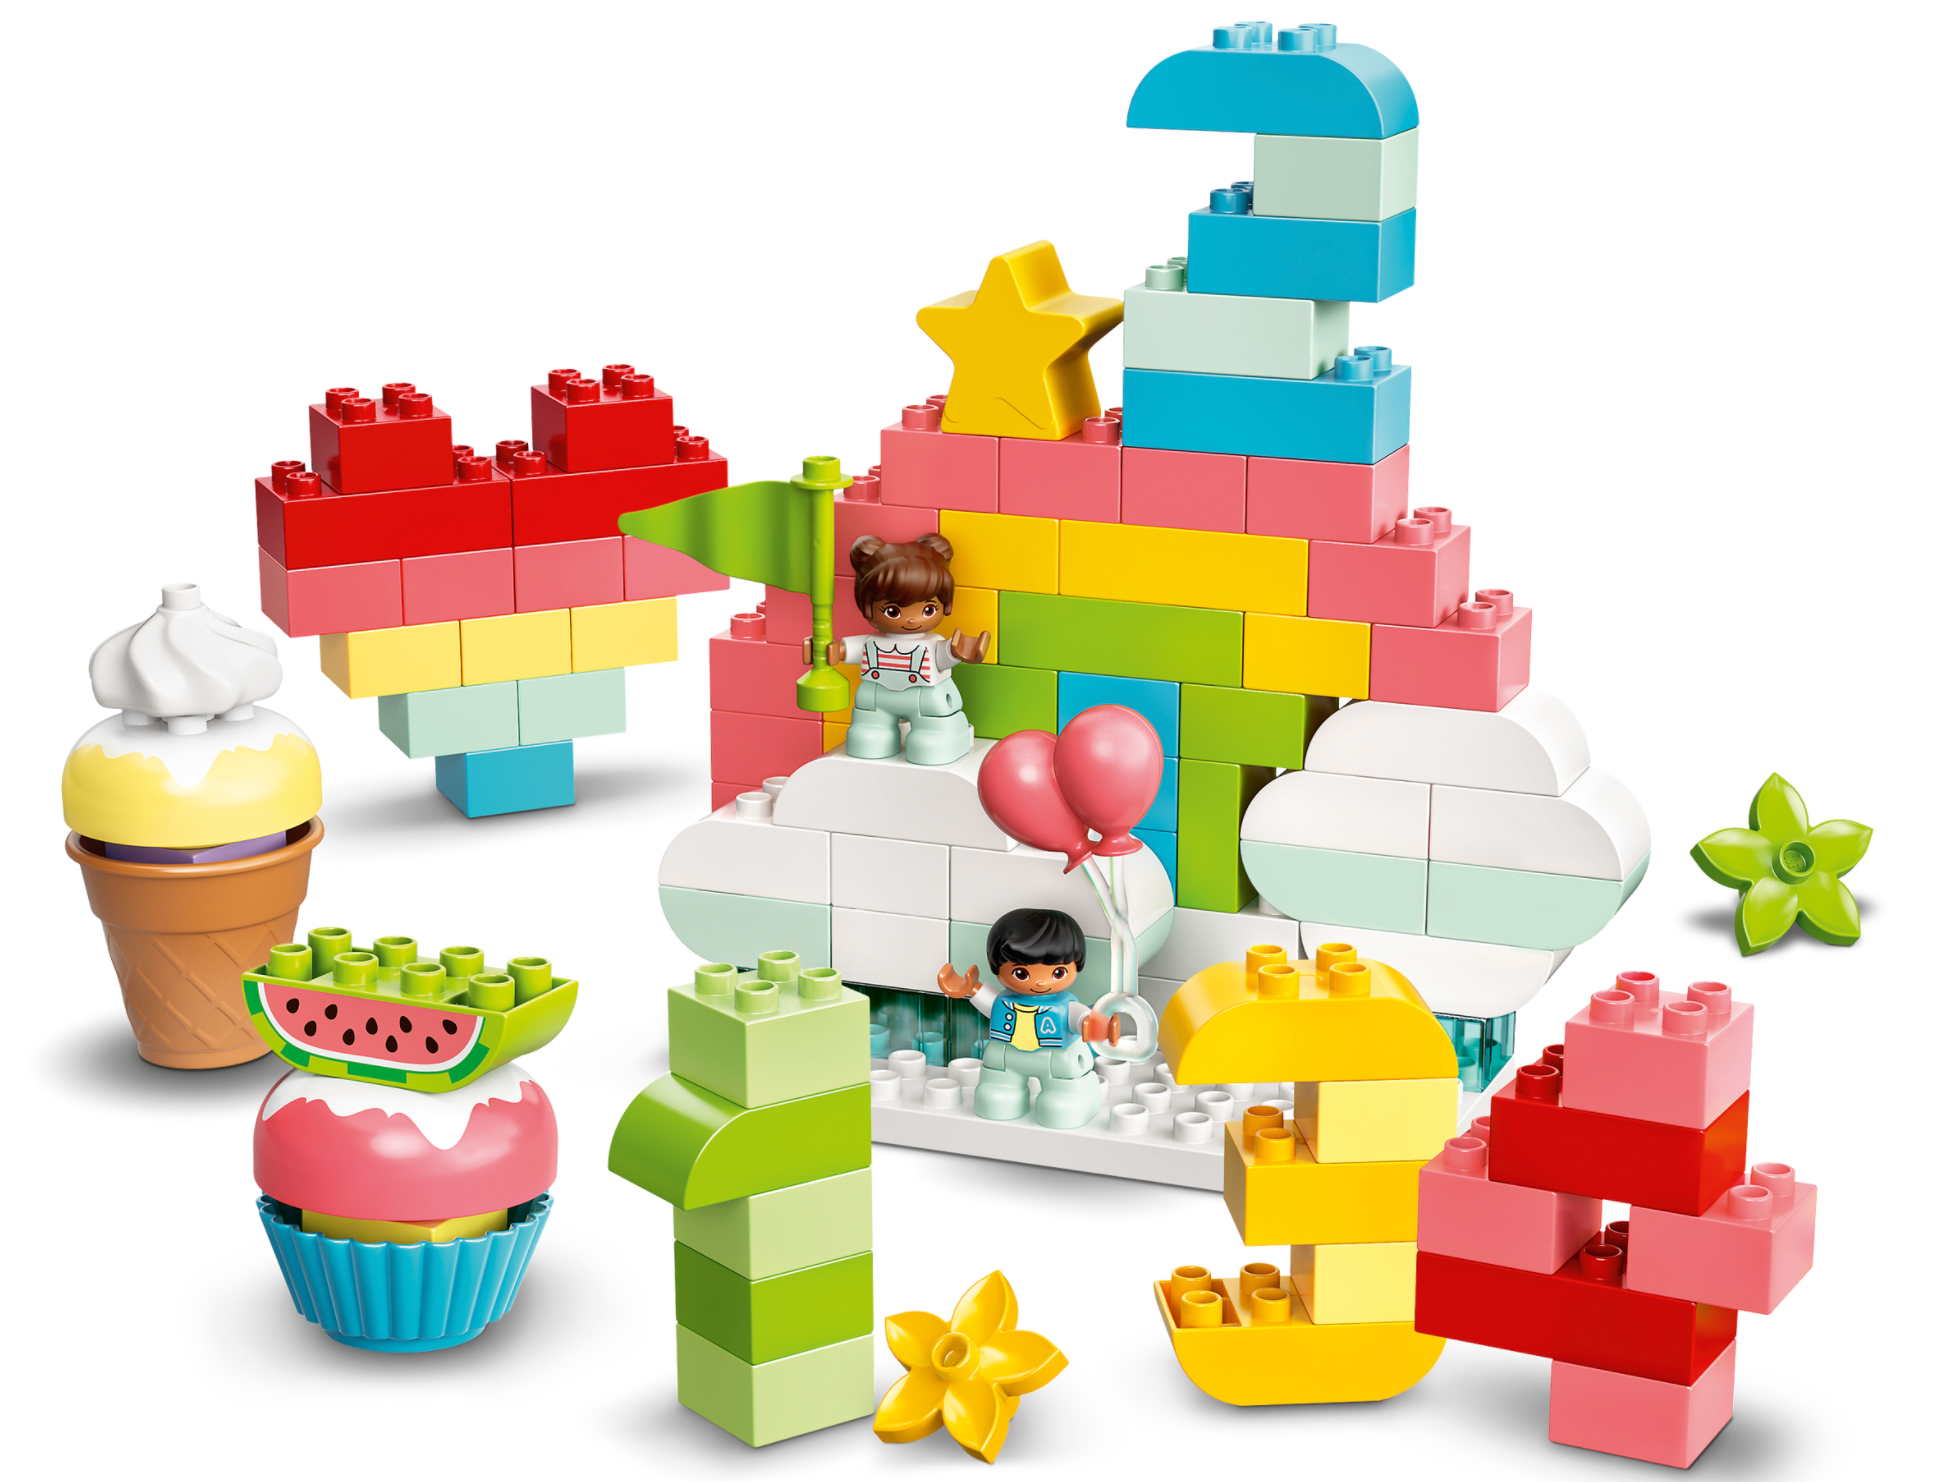 LEGO: DUPLO - Creative Birthday Party